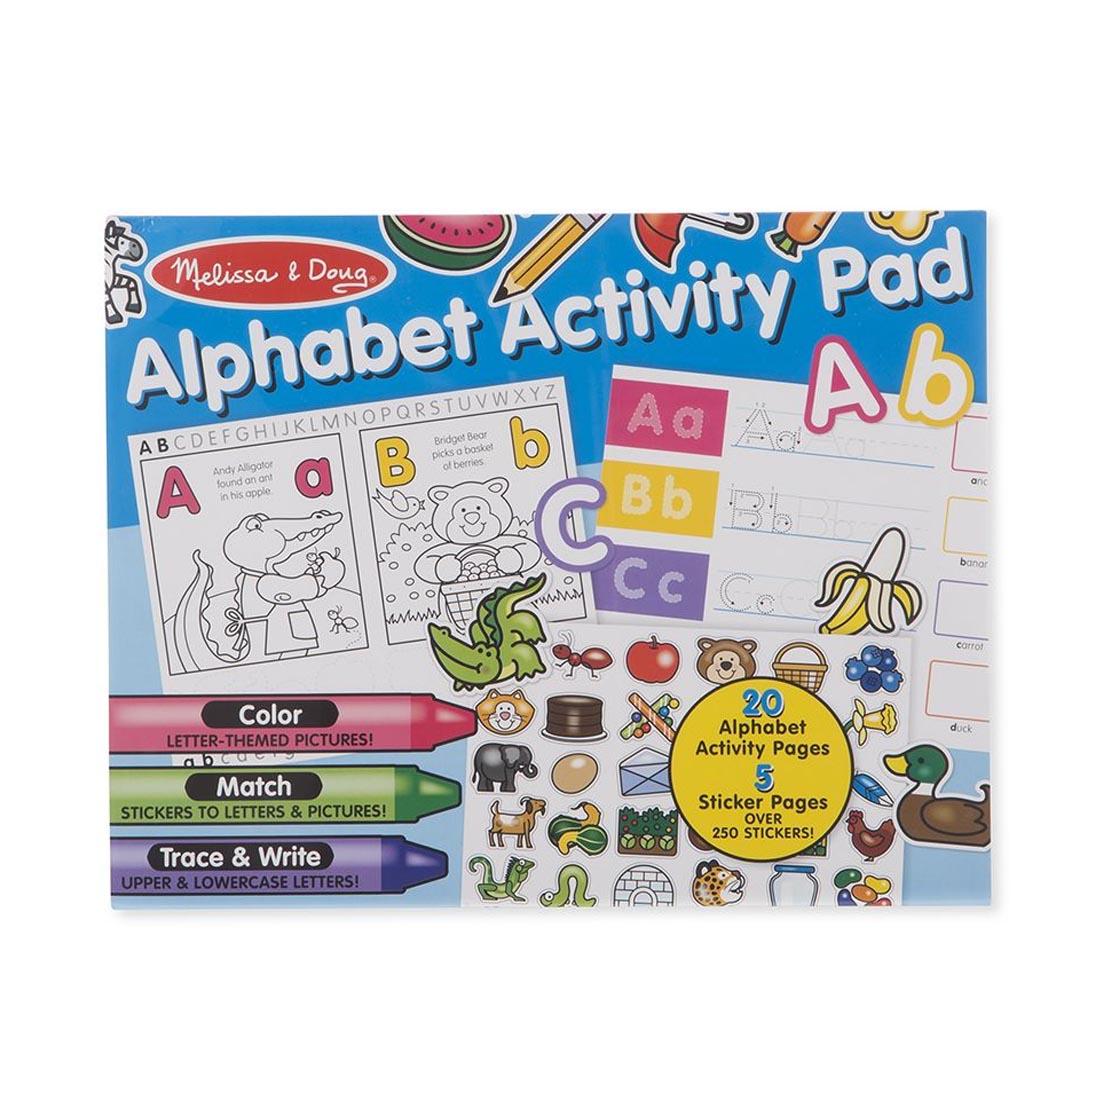 Alphabet Activity Pad by Melissa & Doug